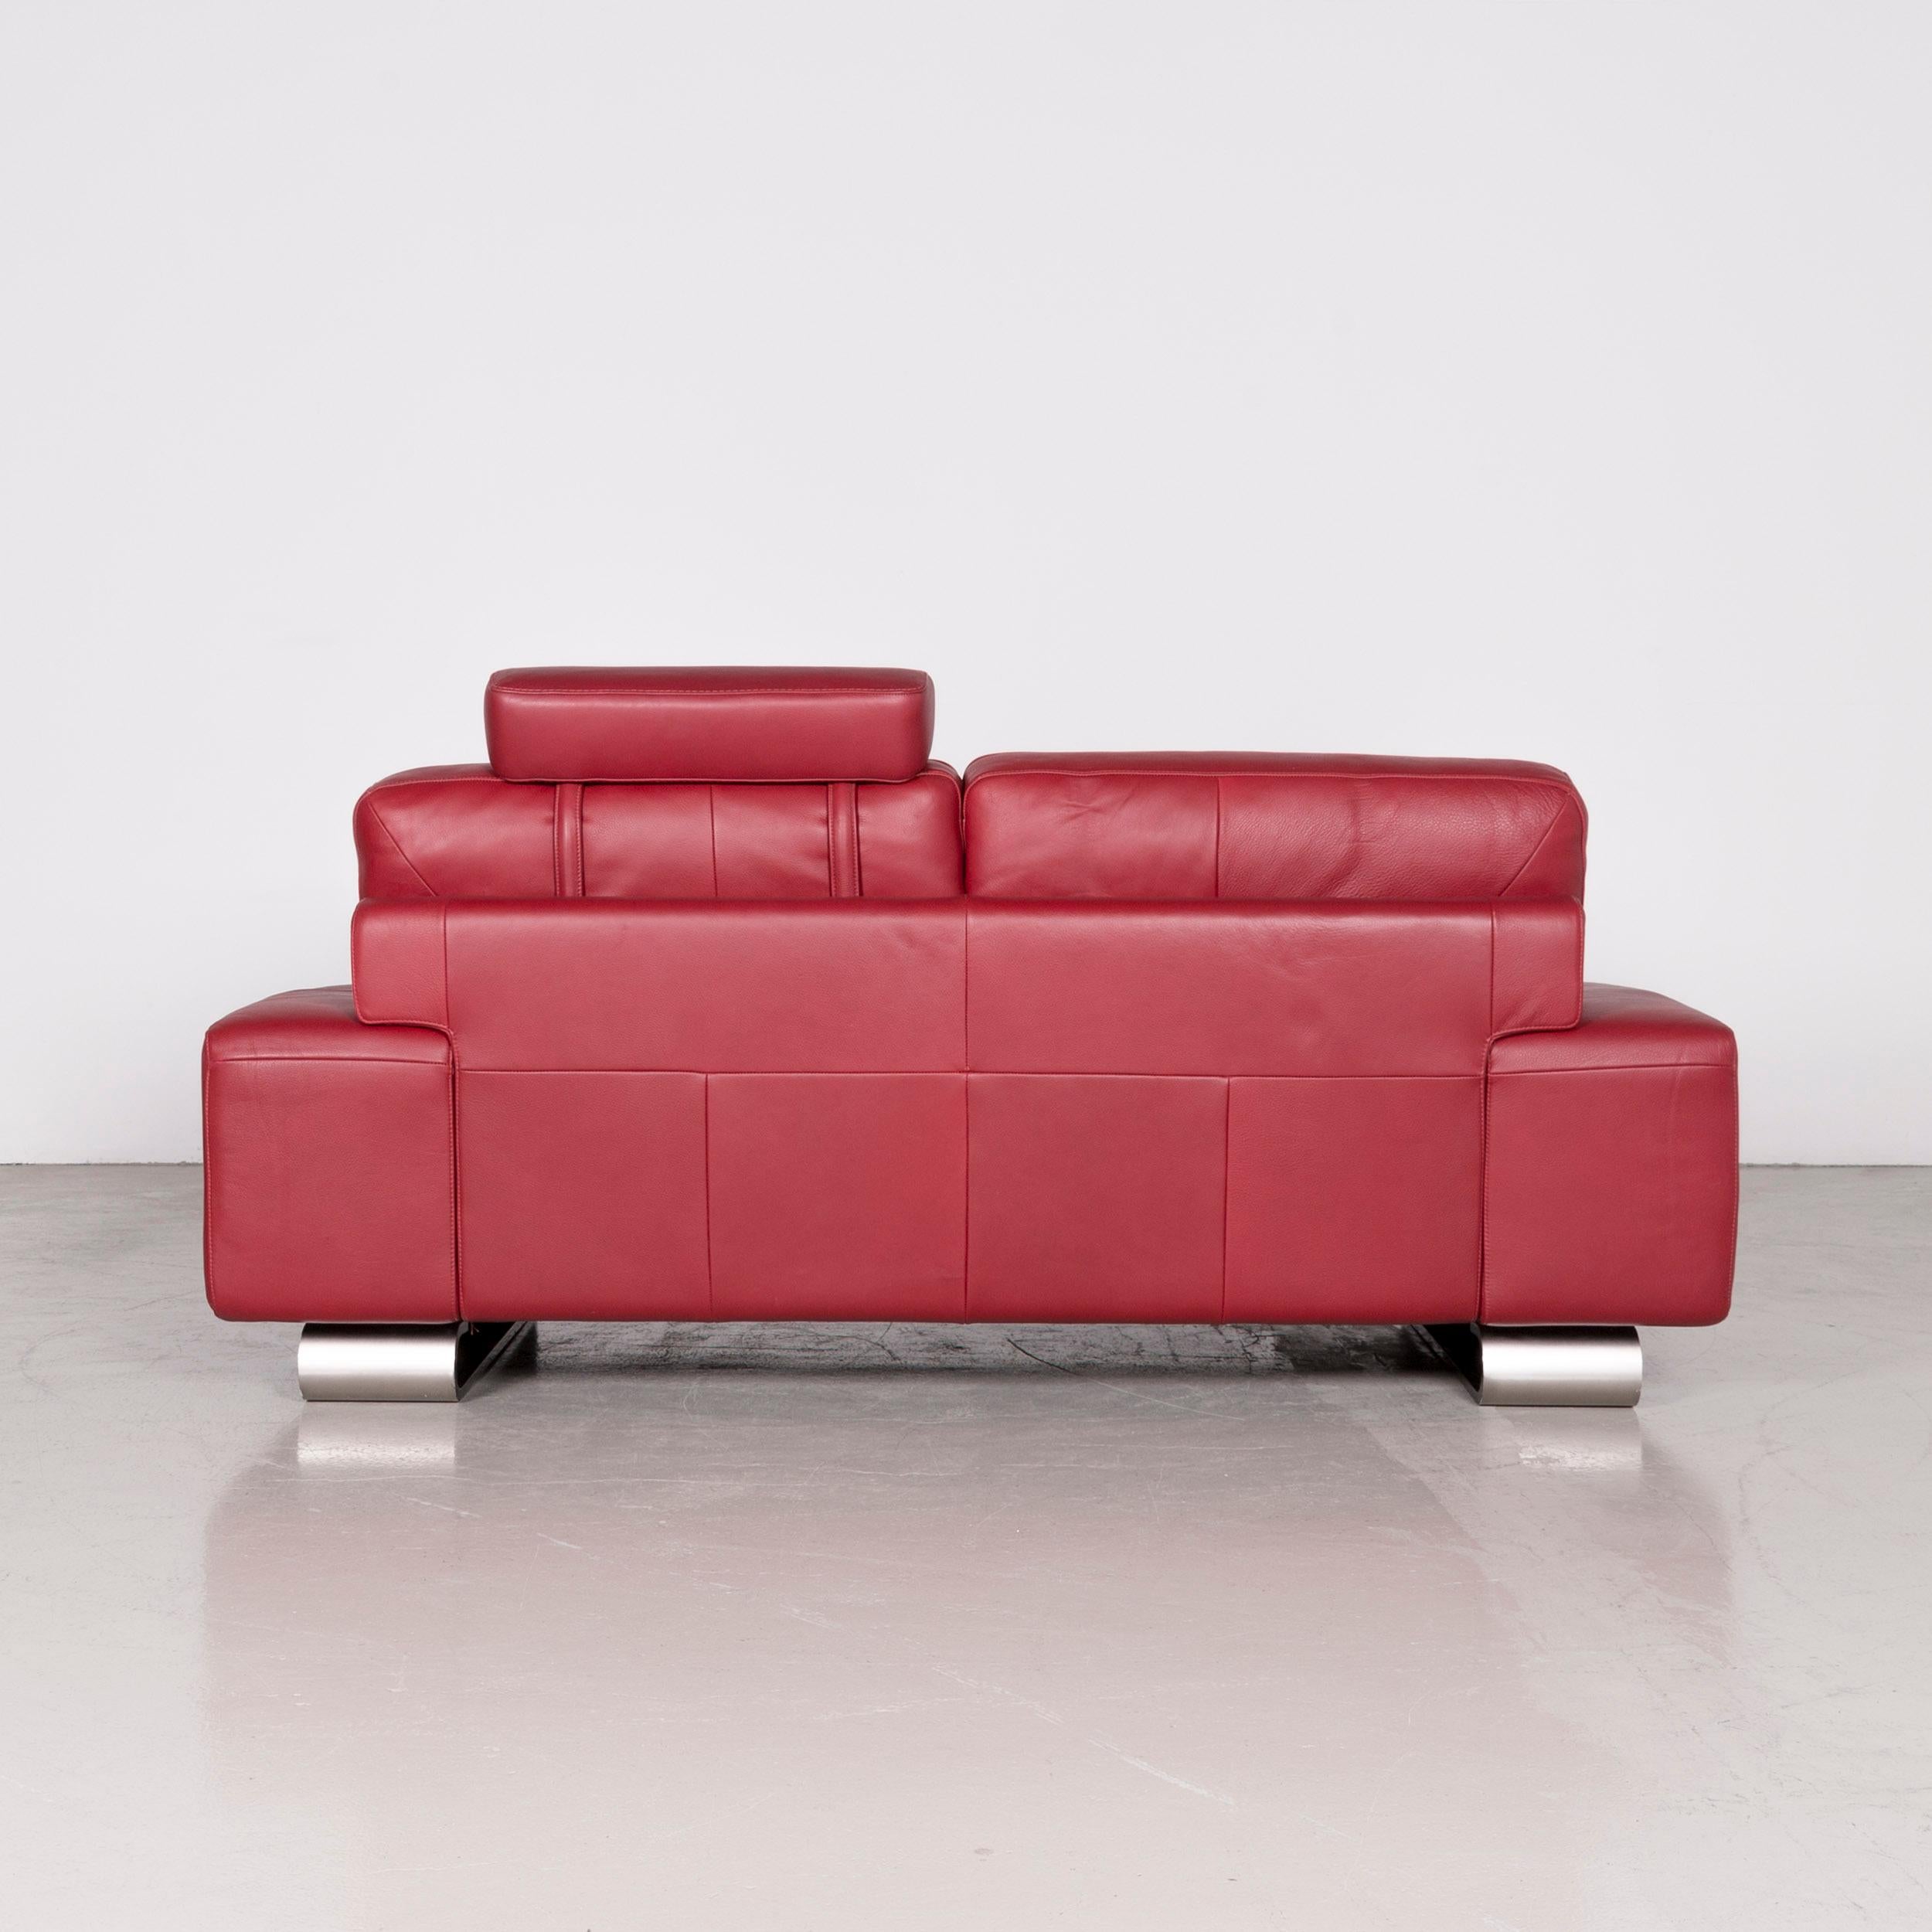 Natuzzi Designer Leather Sofa red Three-Seat Couch 1